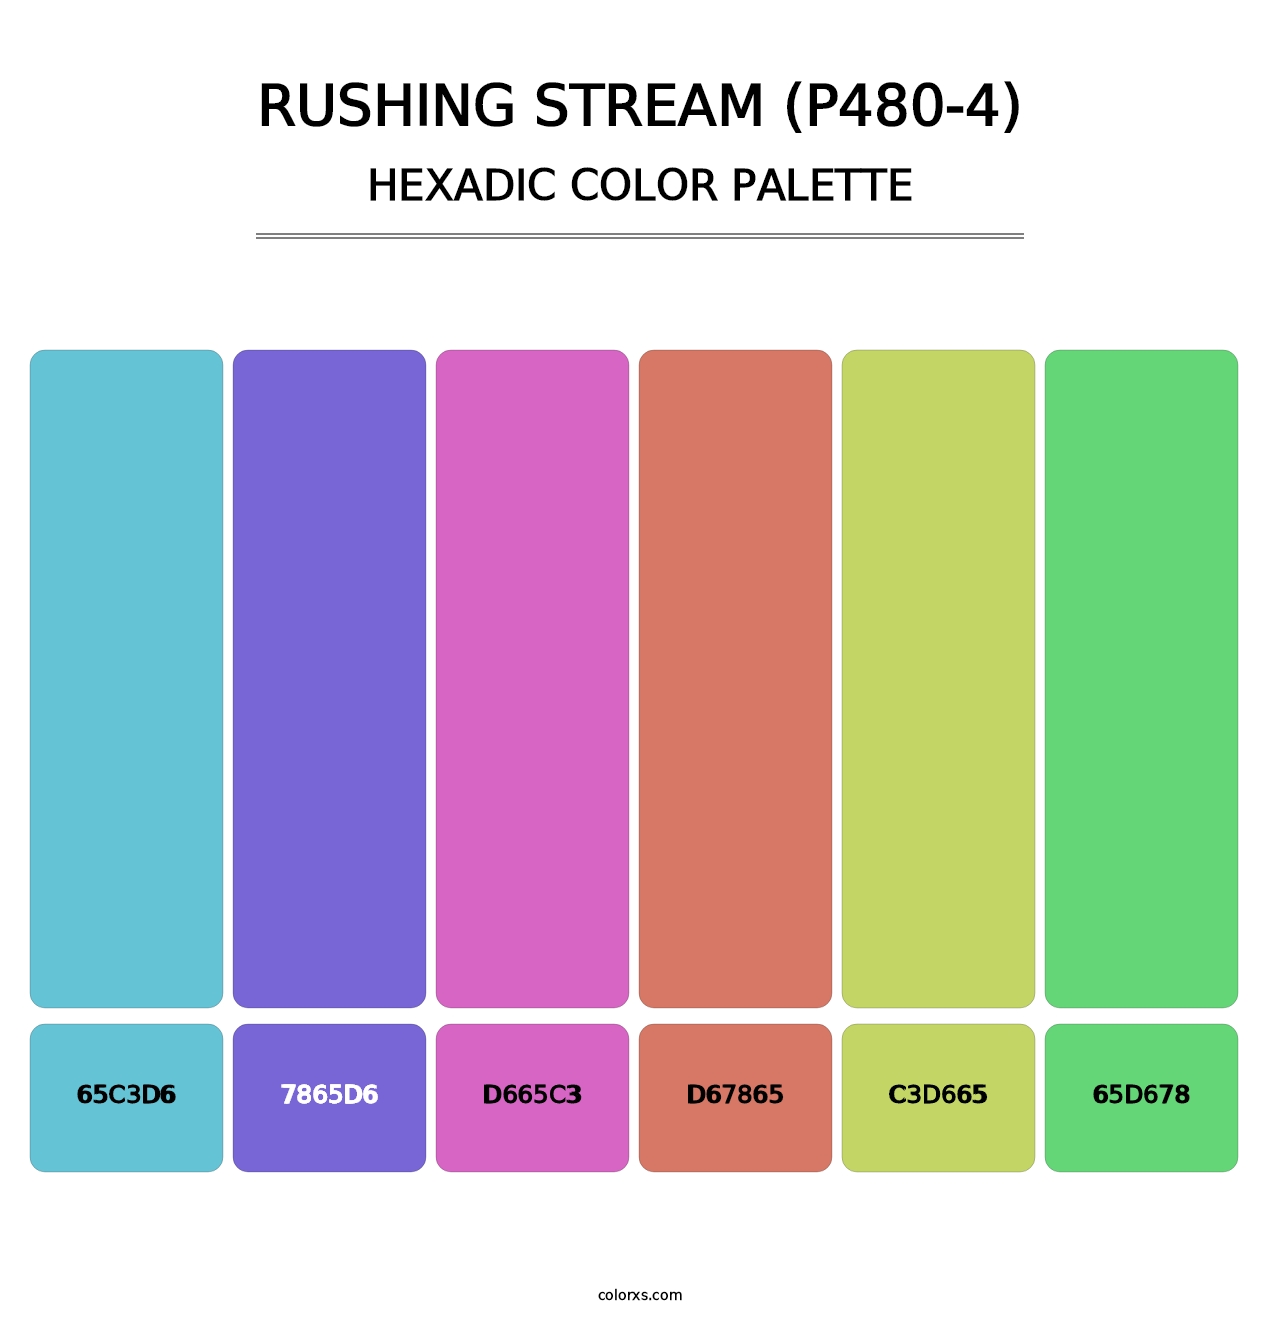 Rushing Stream (P480-4) - Hexadic Color Palette